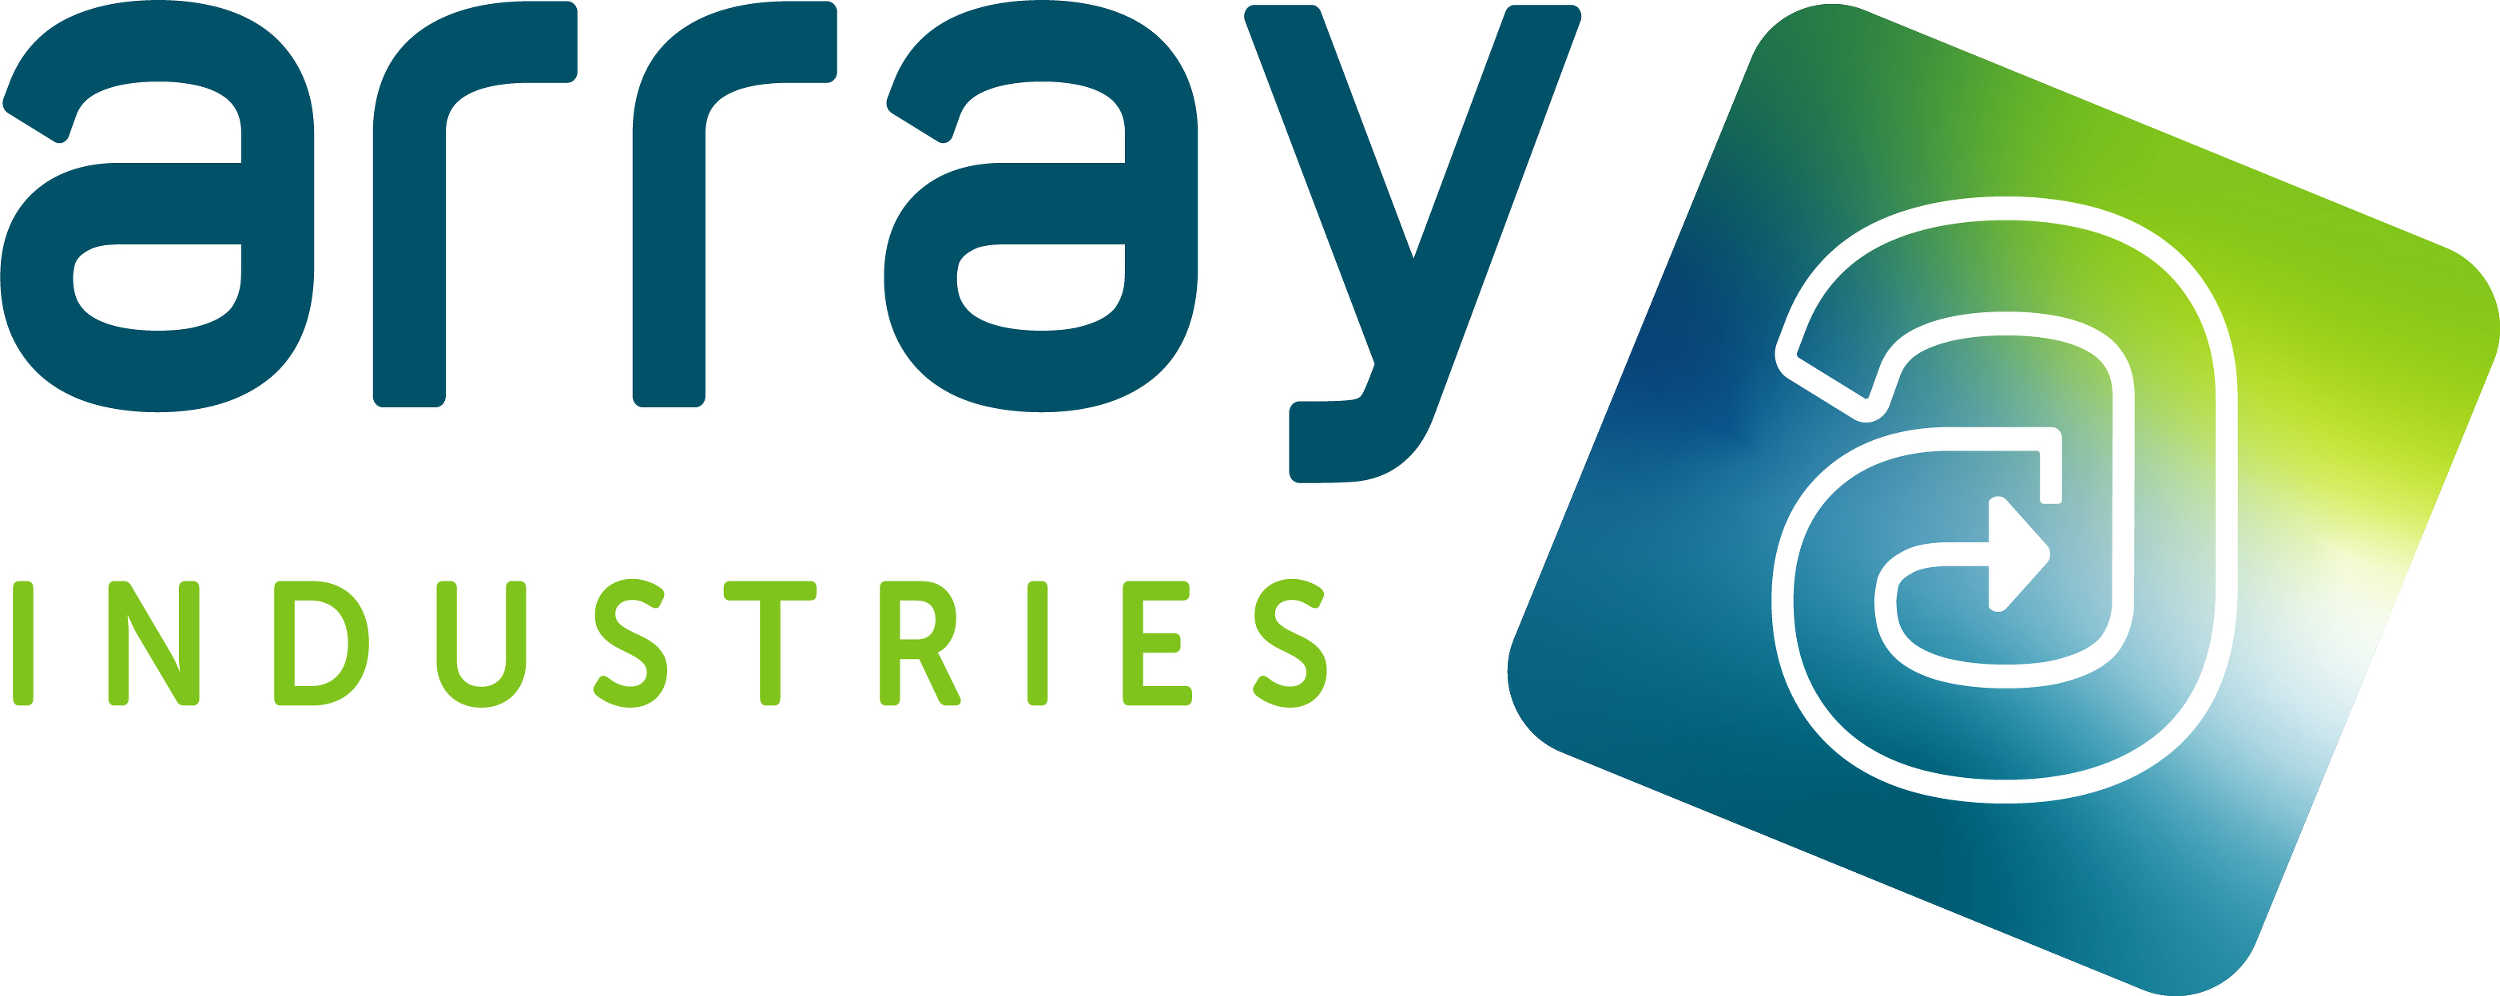 ARRAY-Logo2019.jpg